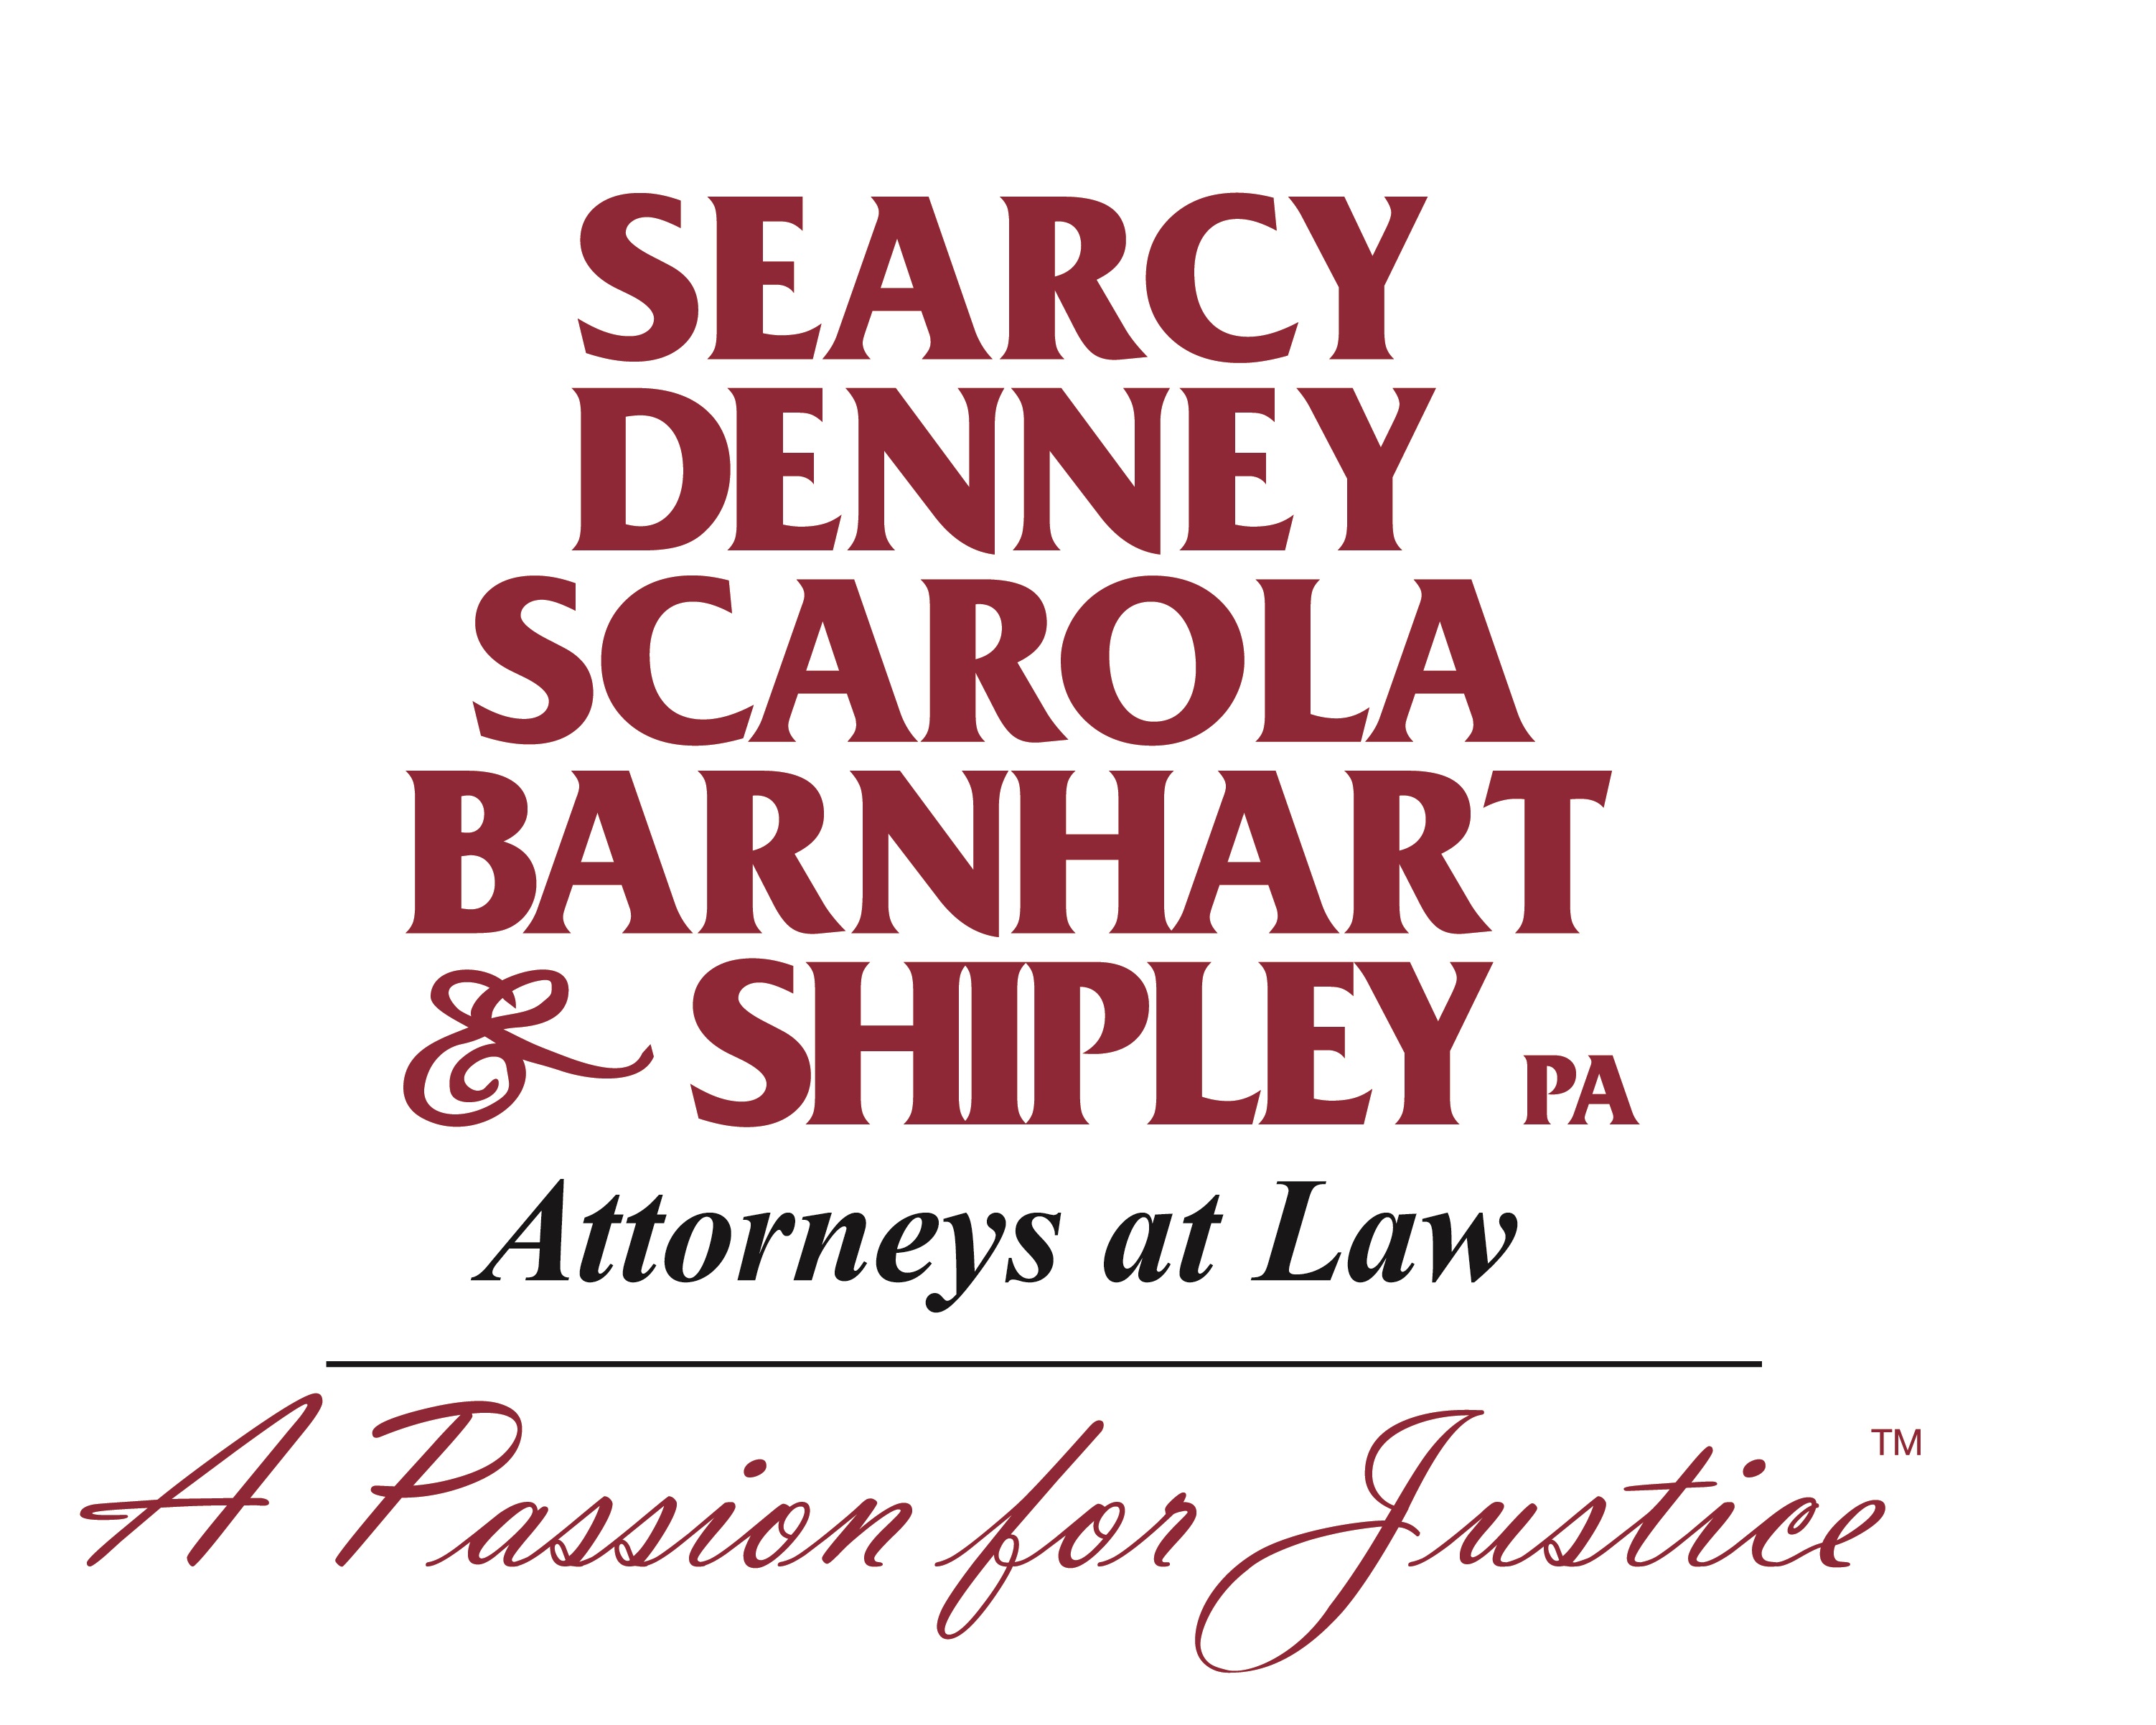 Searcy, Denney, Scarola, Barnhart & Shipley